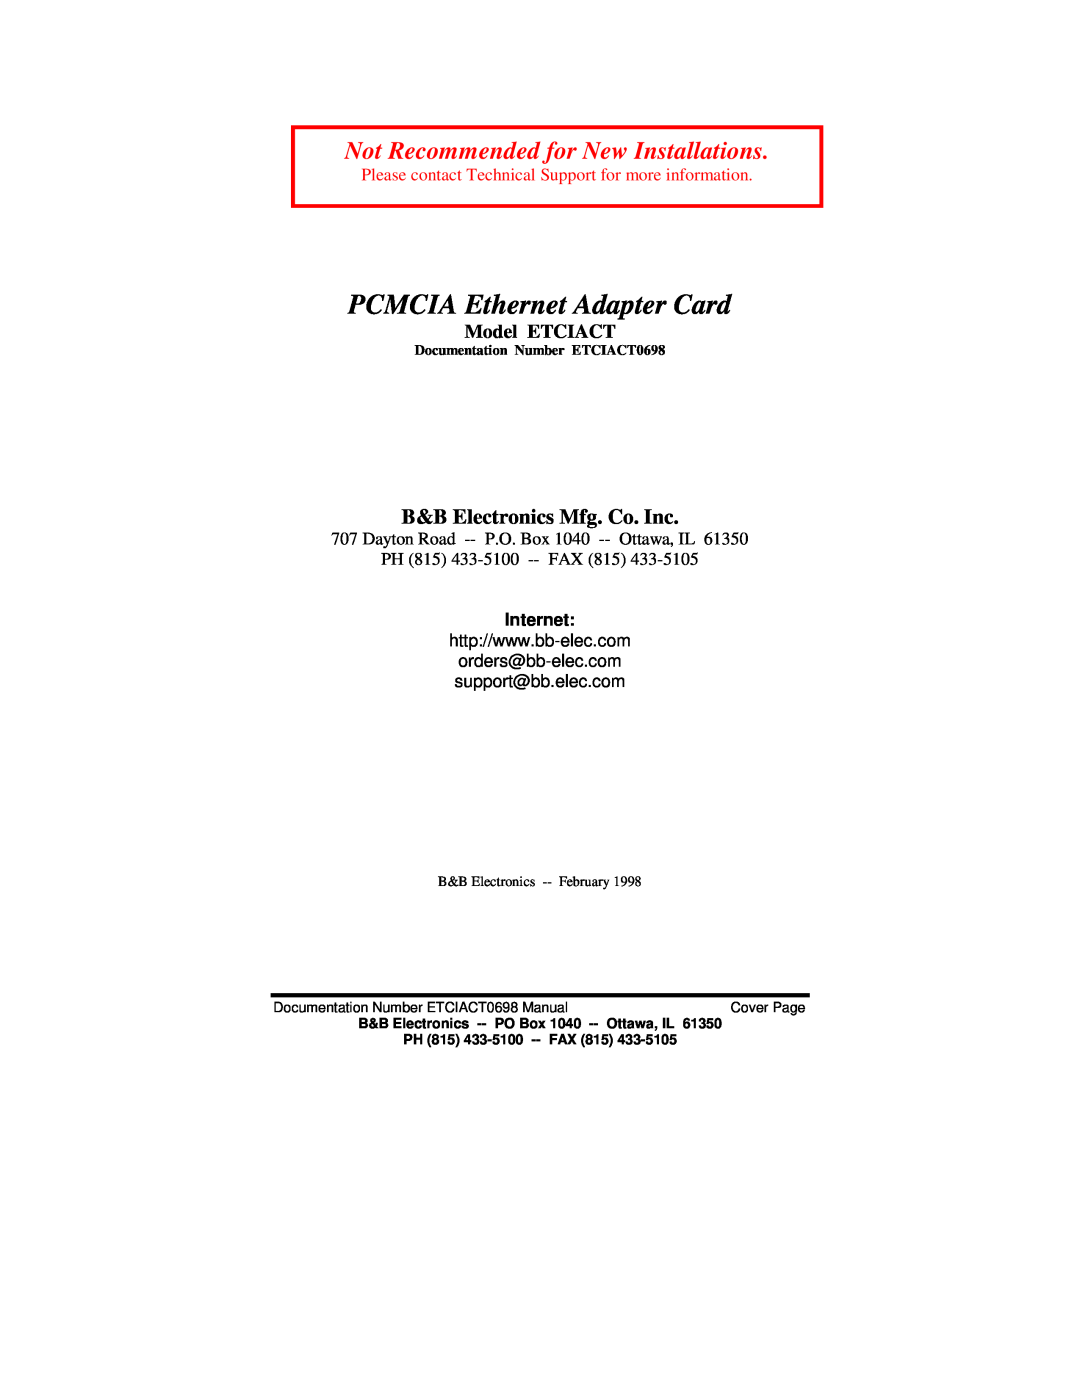 B&B Electronics manual B&B Electronics Mfg. Co. Inc, PCMCIA Ethernet Adapter Card, Model ETCIACT, Internet, Cover Page 